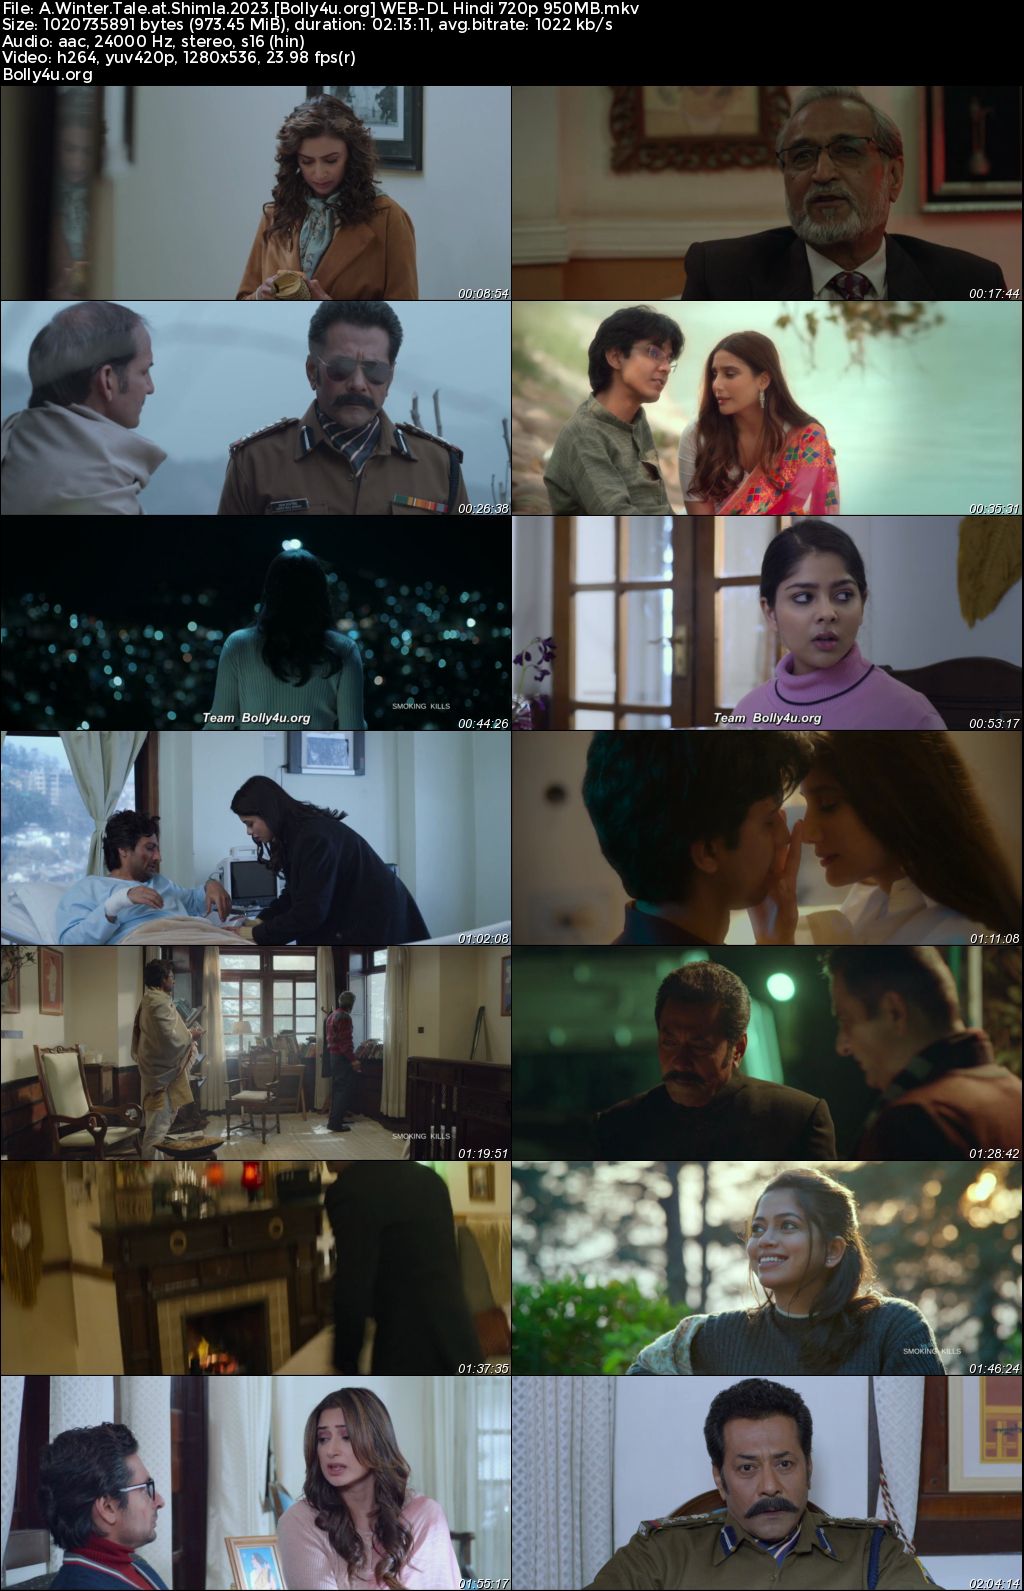 A Winter Tale at Shimla 2023 WEB-DL Hindi Full Movie Download 1080p 720p 480p